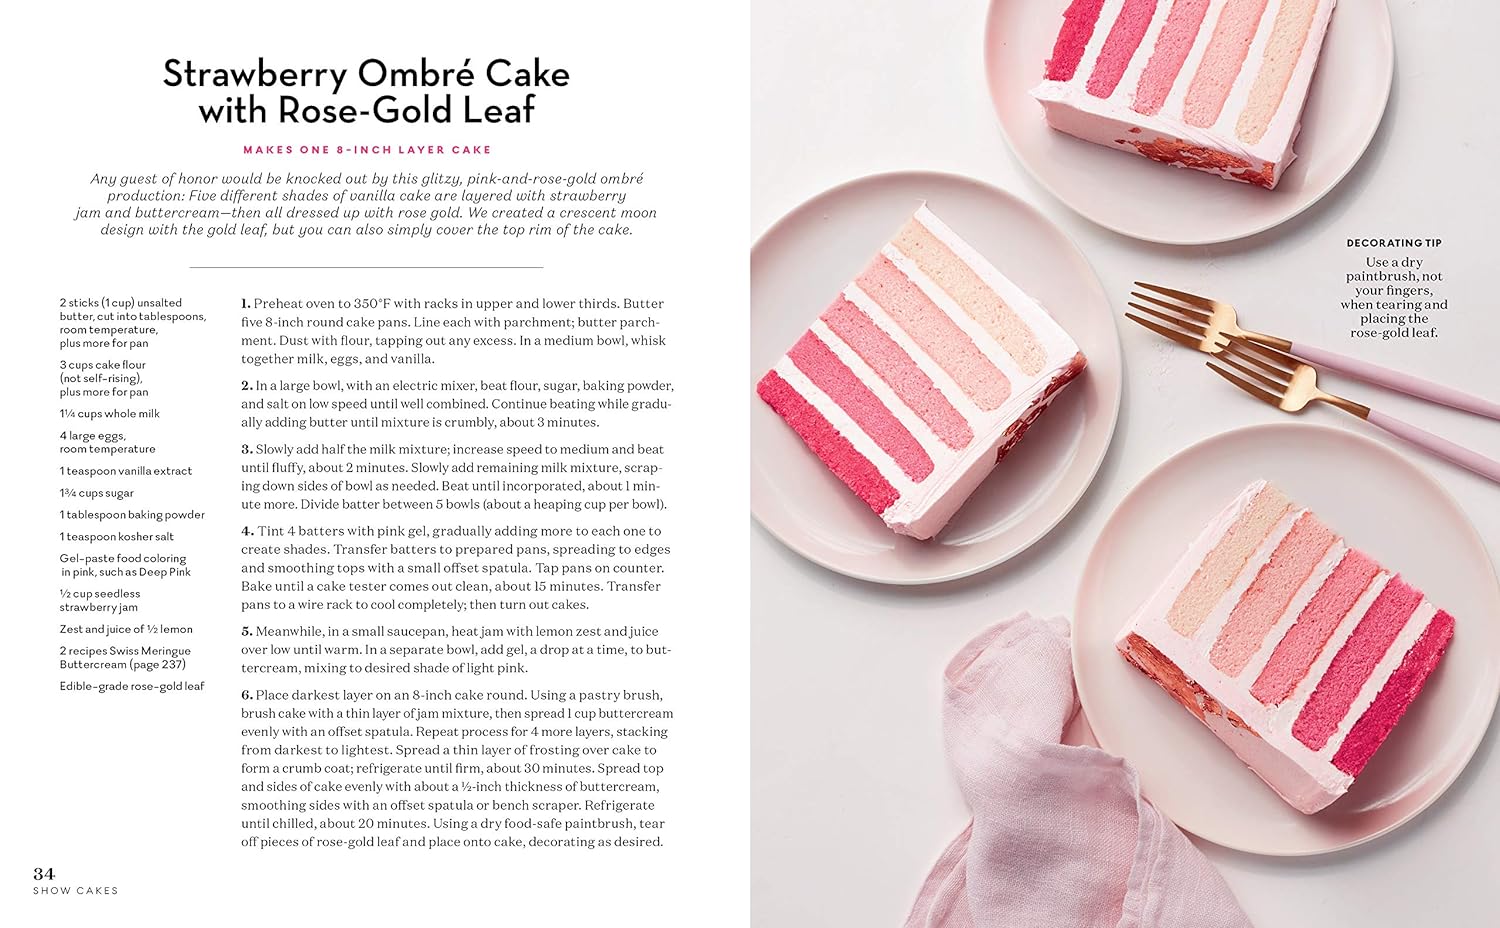 Martha Stewarts Cake Perfection Hardcover